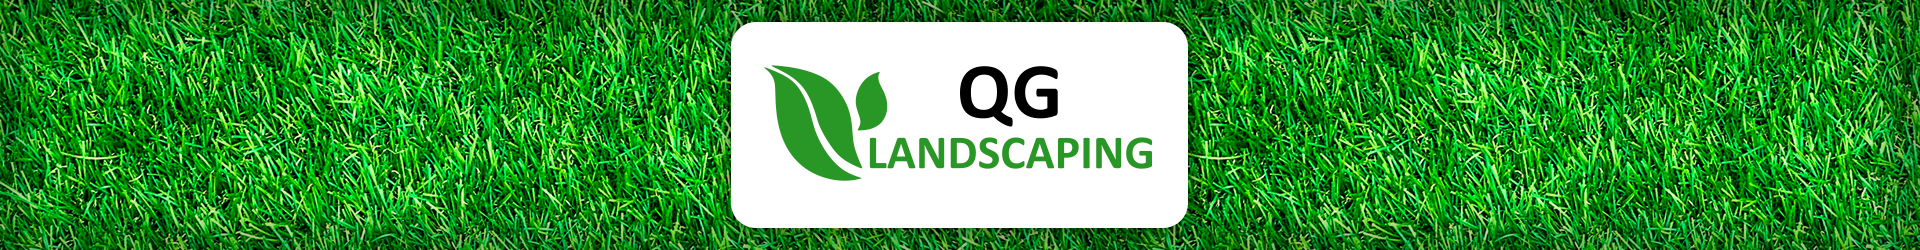 QG Landscaping - top header